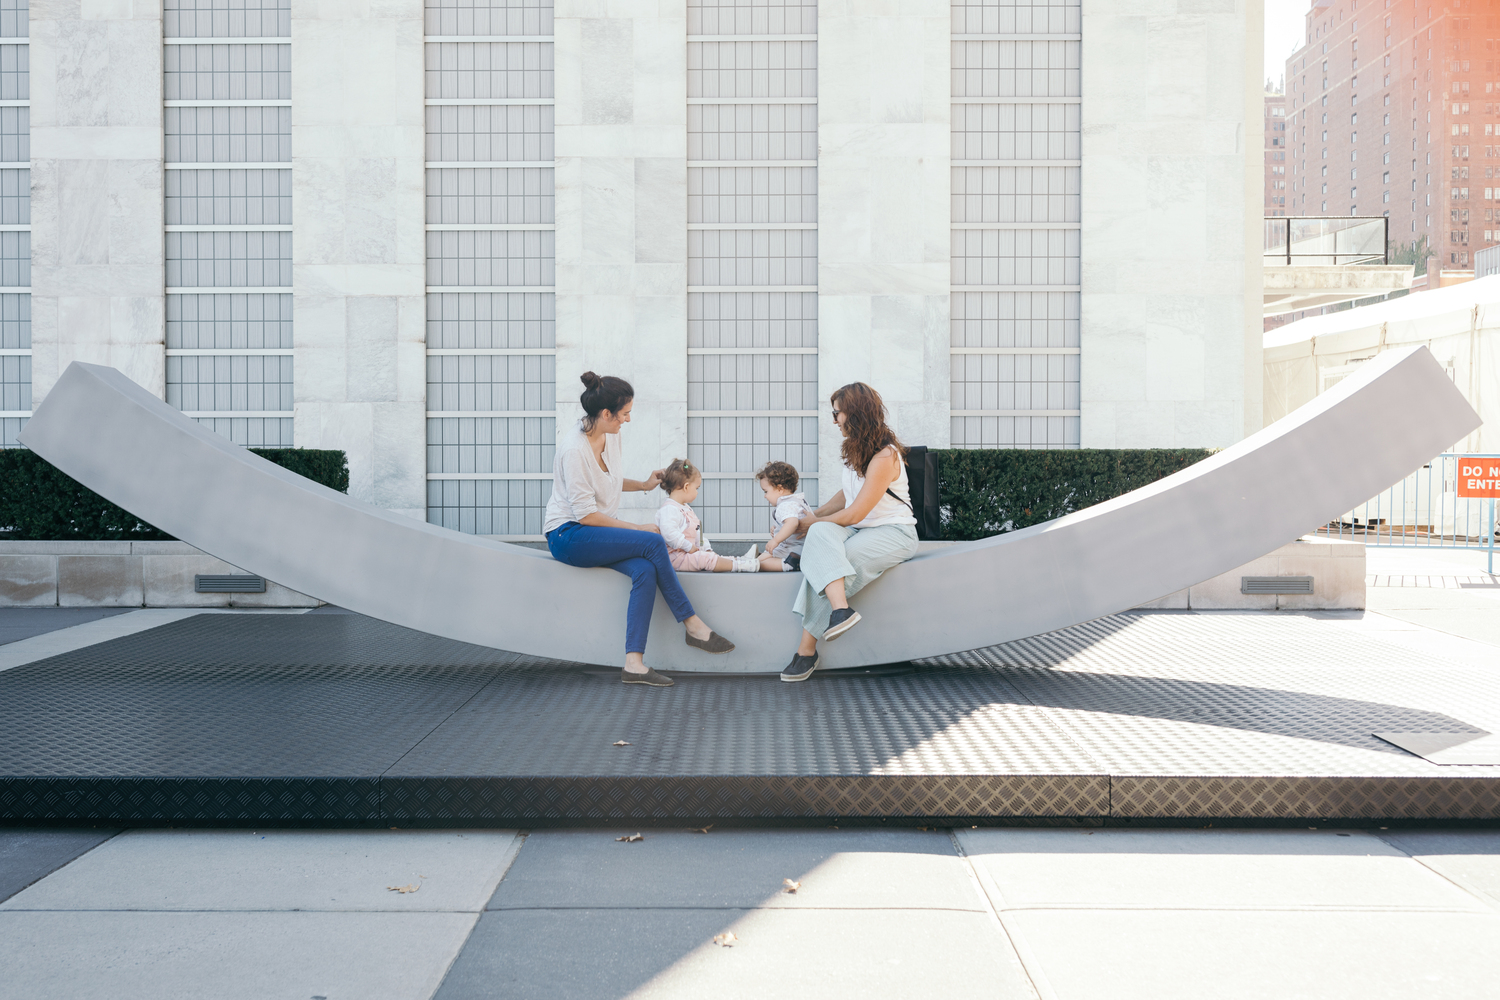 Peace Bench Sculpture for the UN Headquarters / Snøhetta